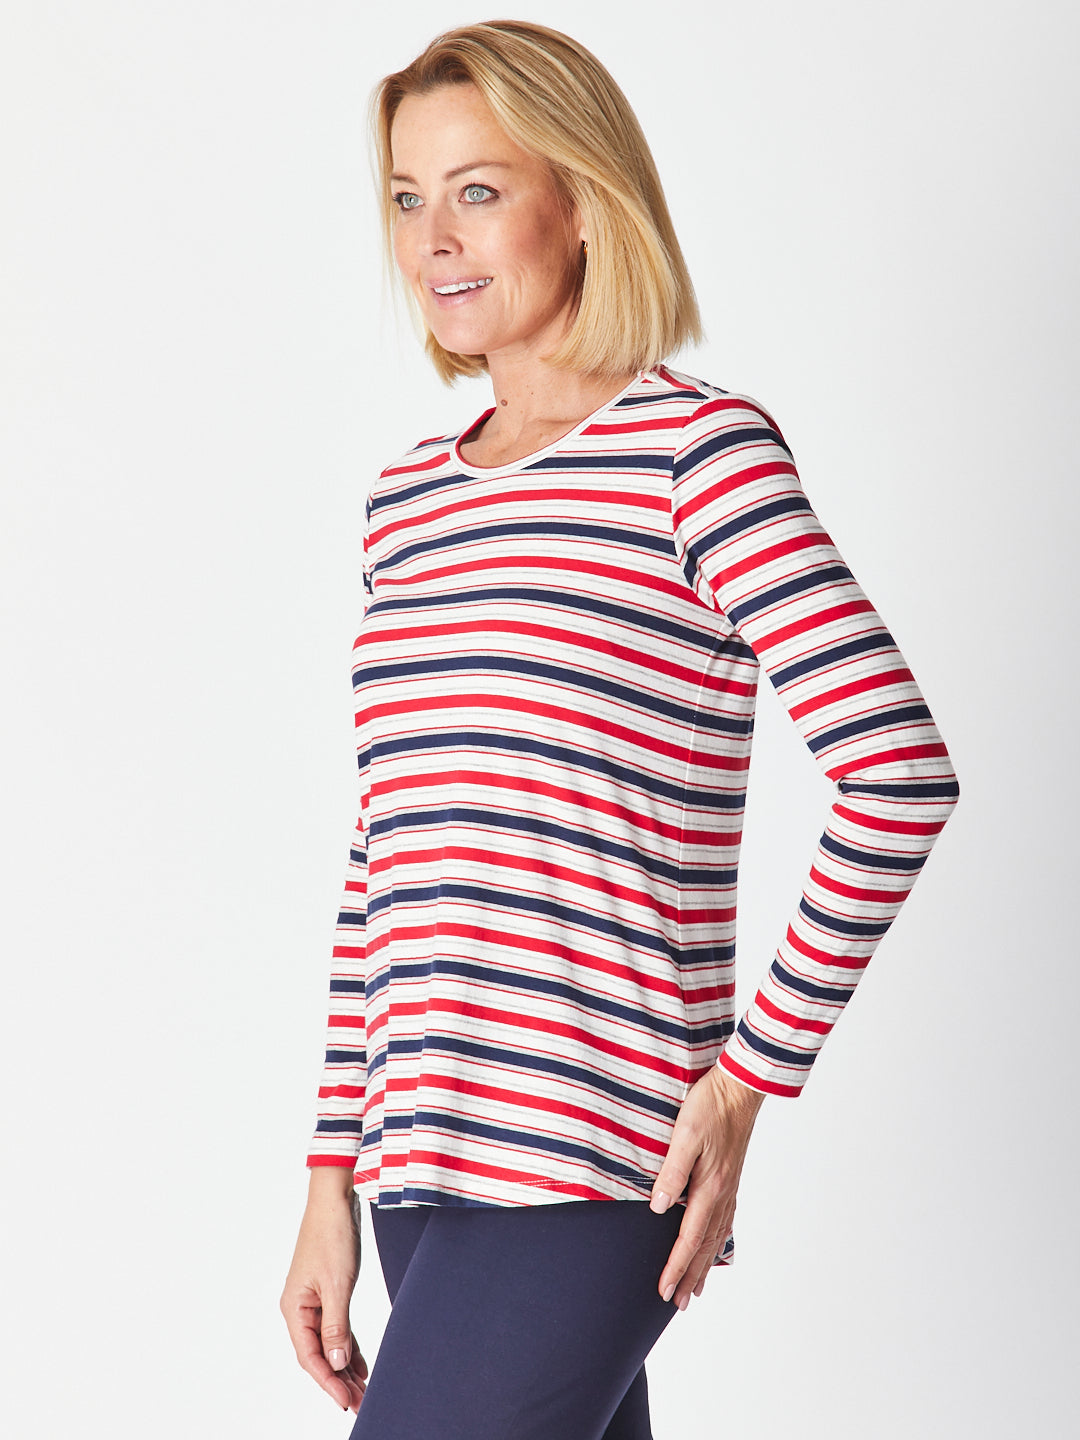 Womens Crop Long Sleeve T Shirt Ladies Short Plain Basic Round Neck Shirts Top  8-14 (Baby Pink UK 8-10) : : Fashion